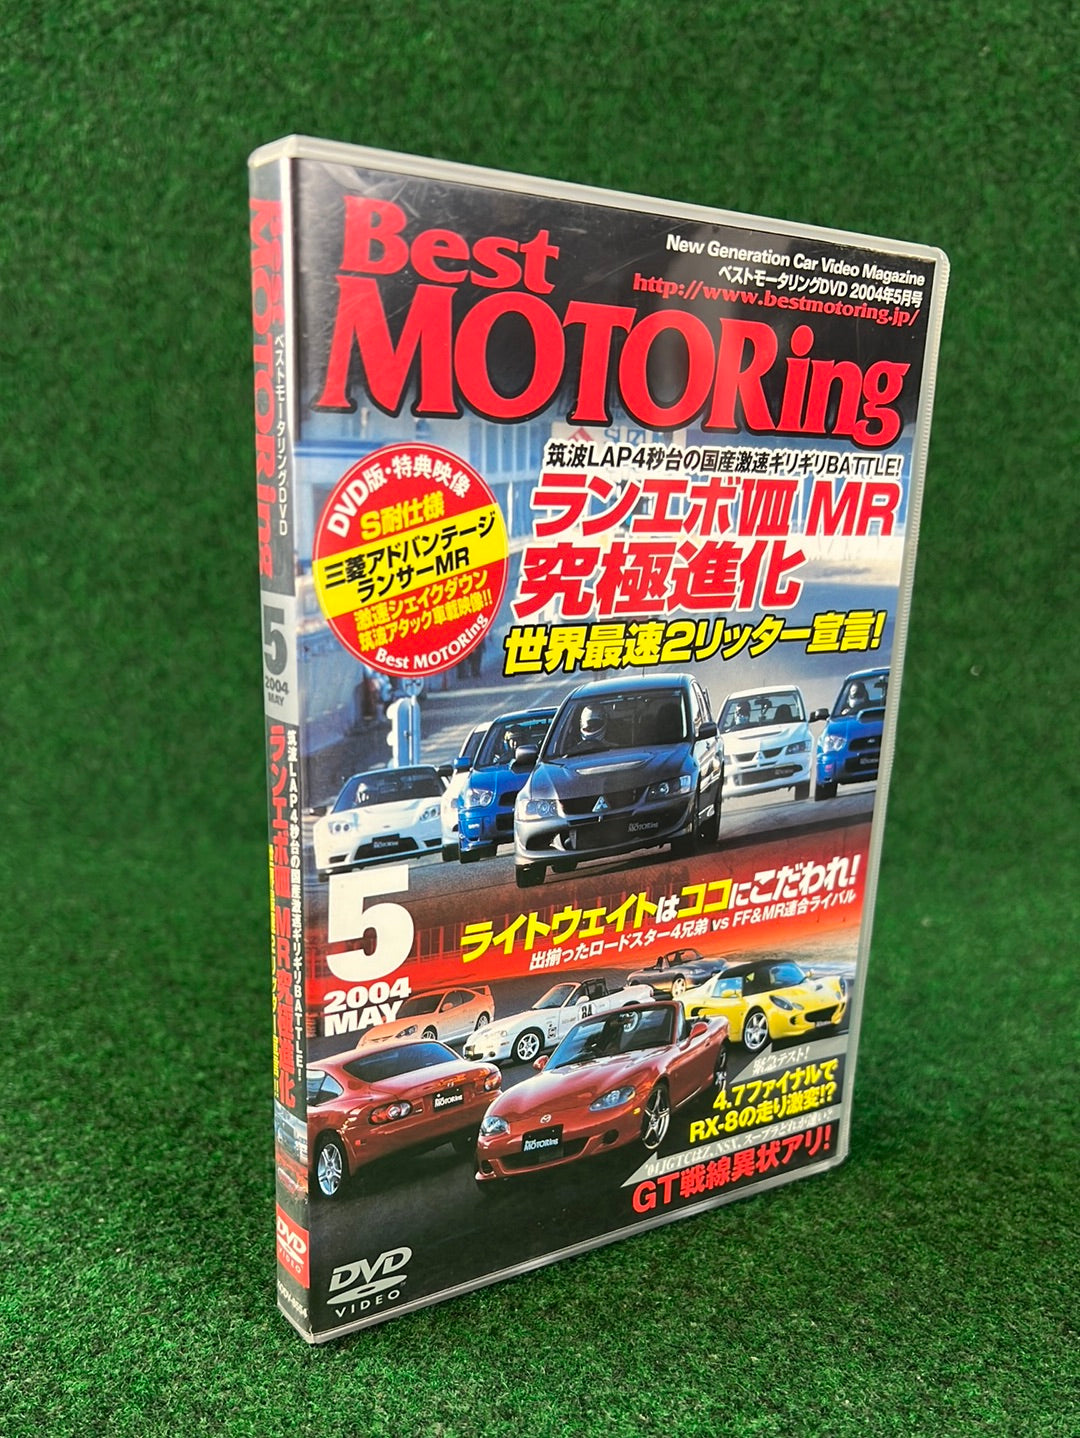 Best Motoring DVD - May 2004